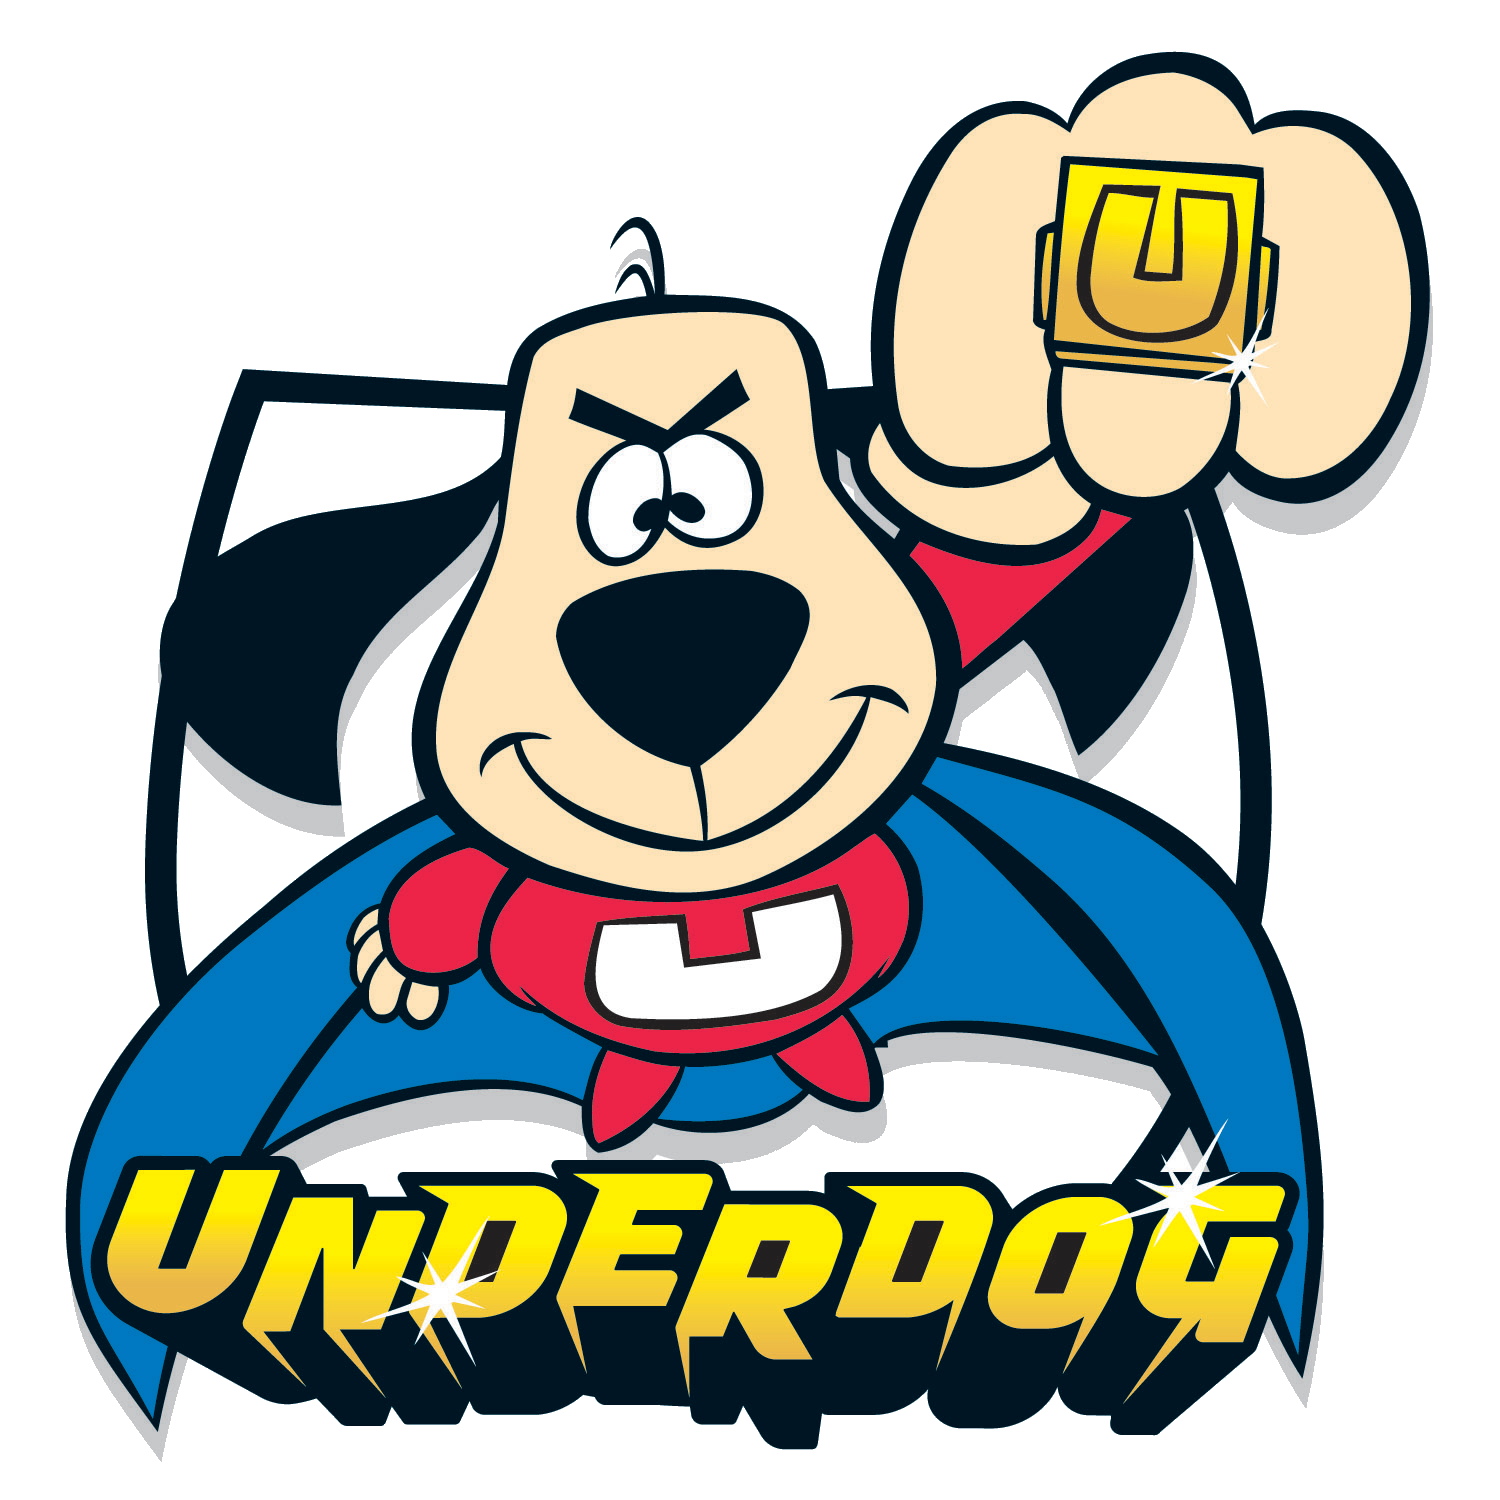 Underdog logo.